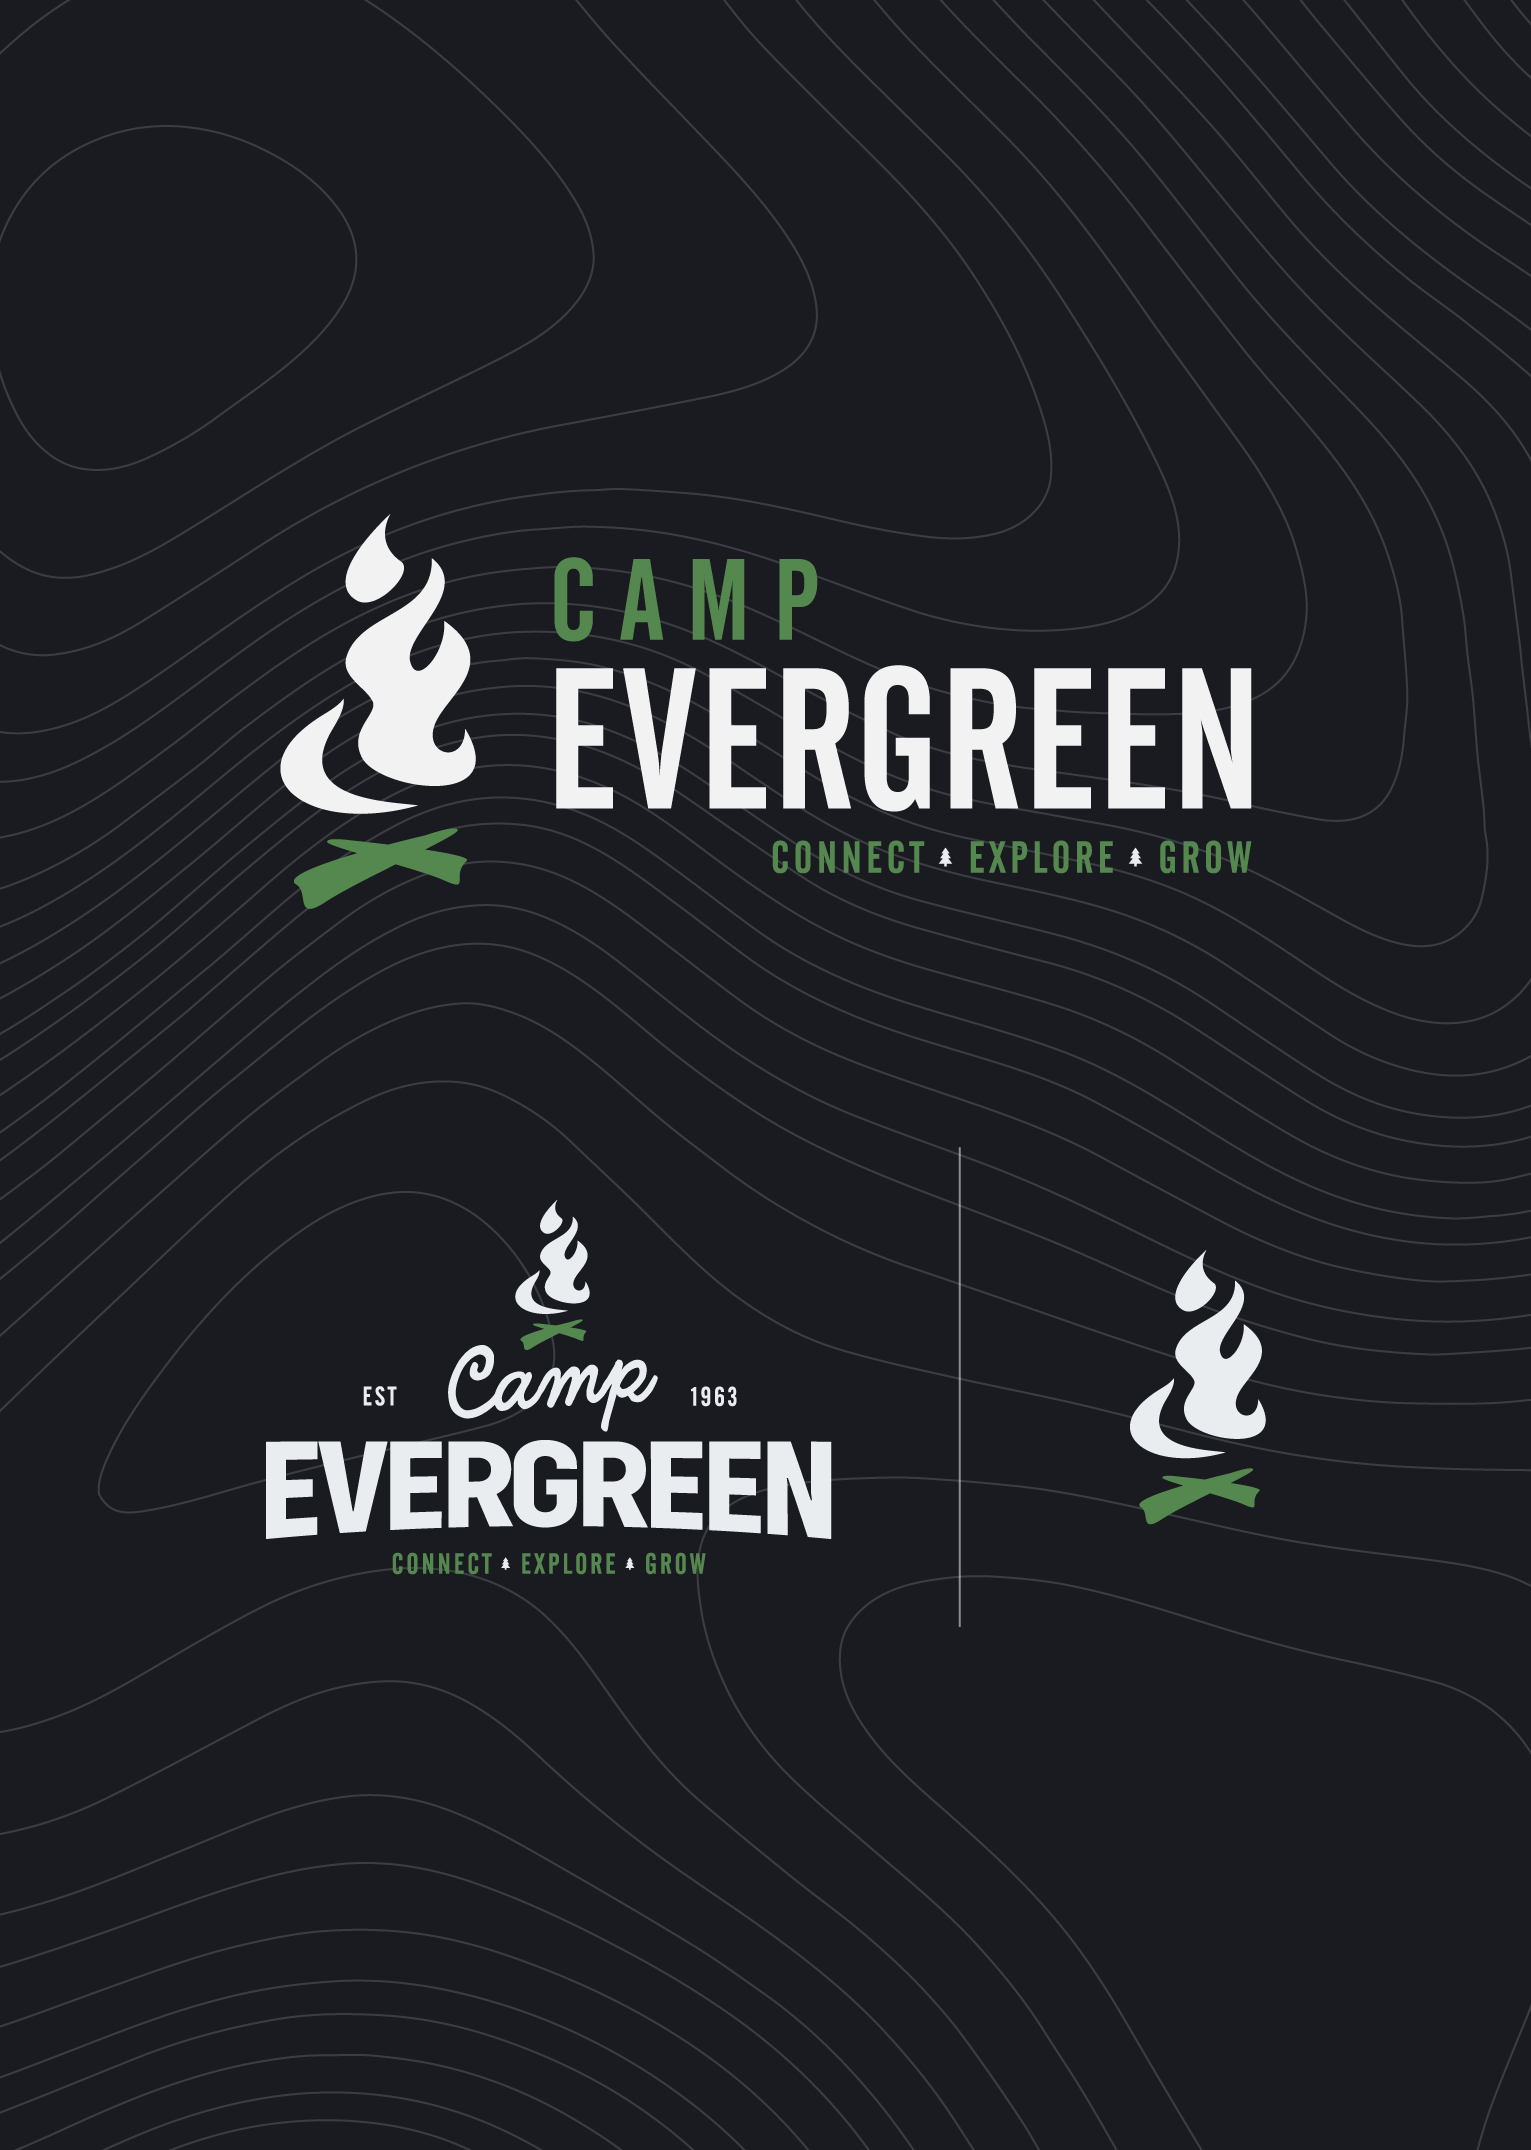 Camp Evergreen Branding